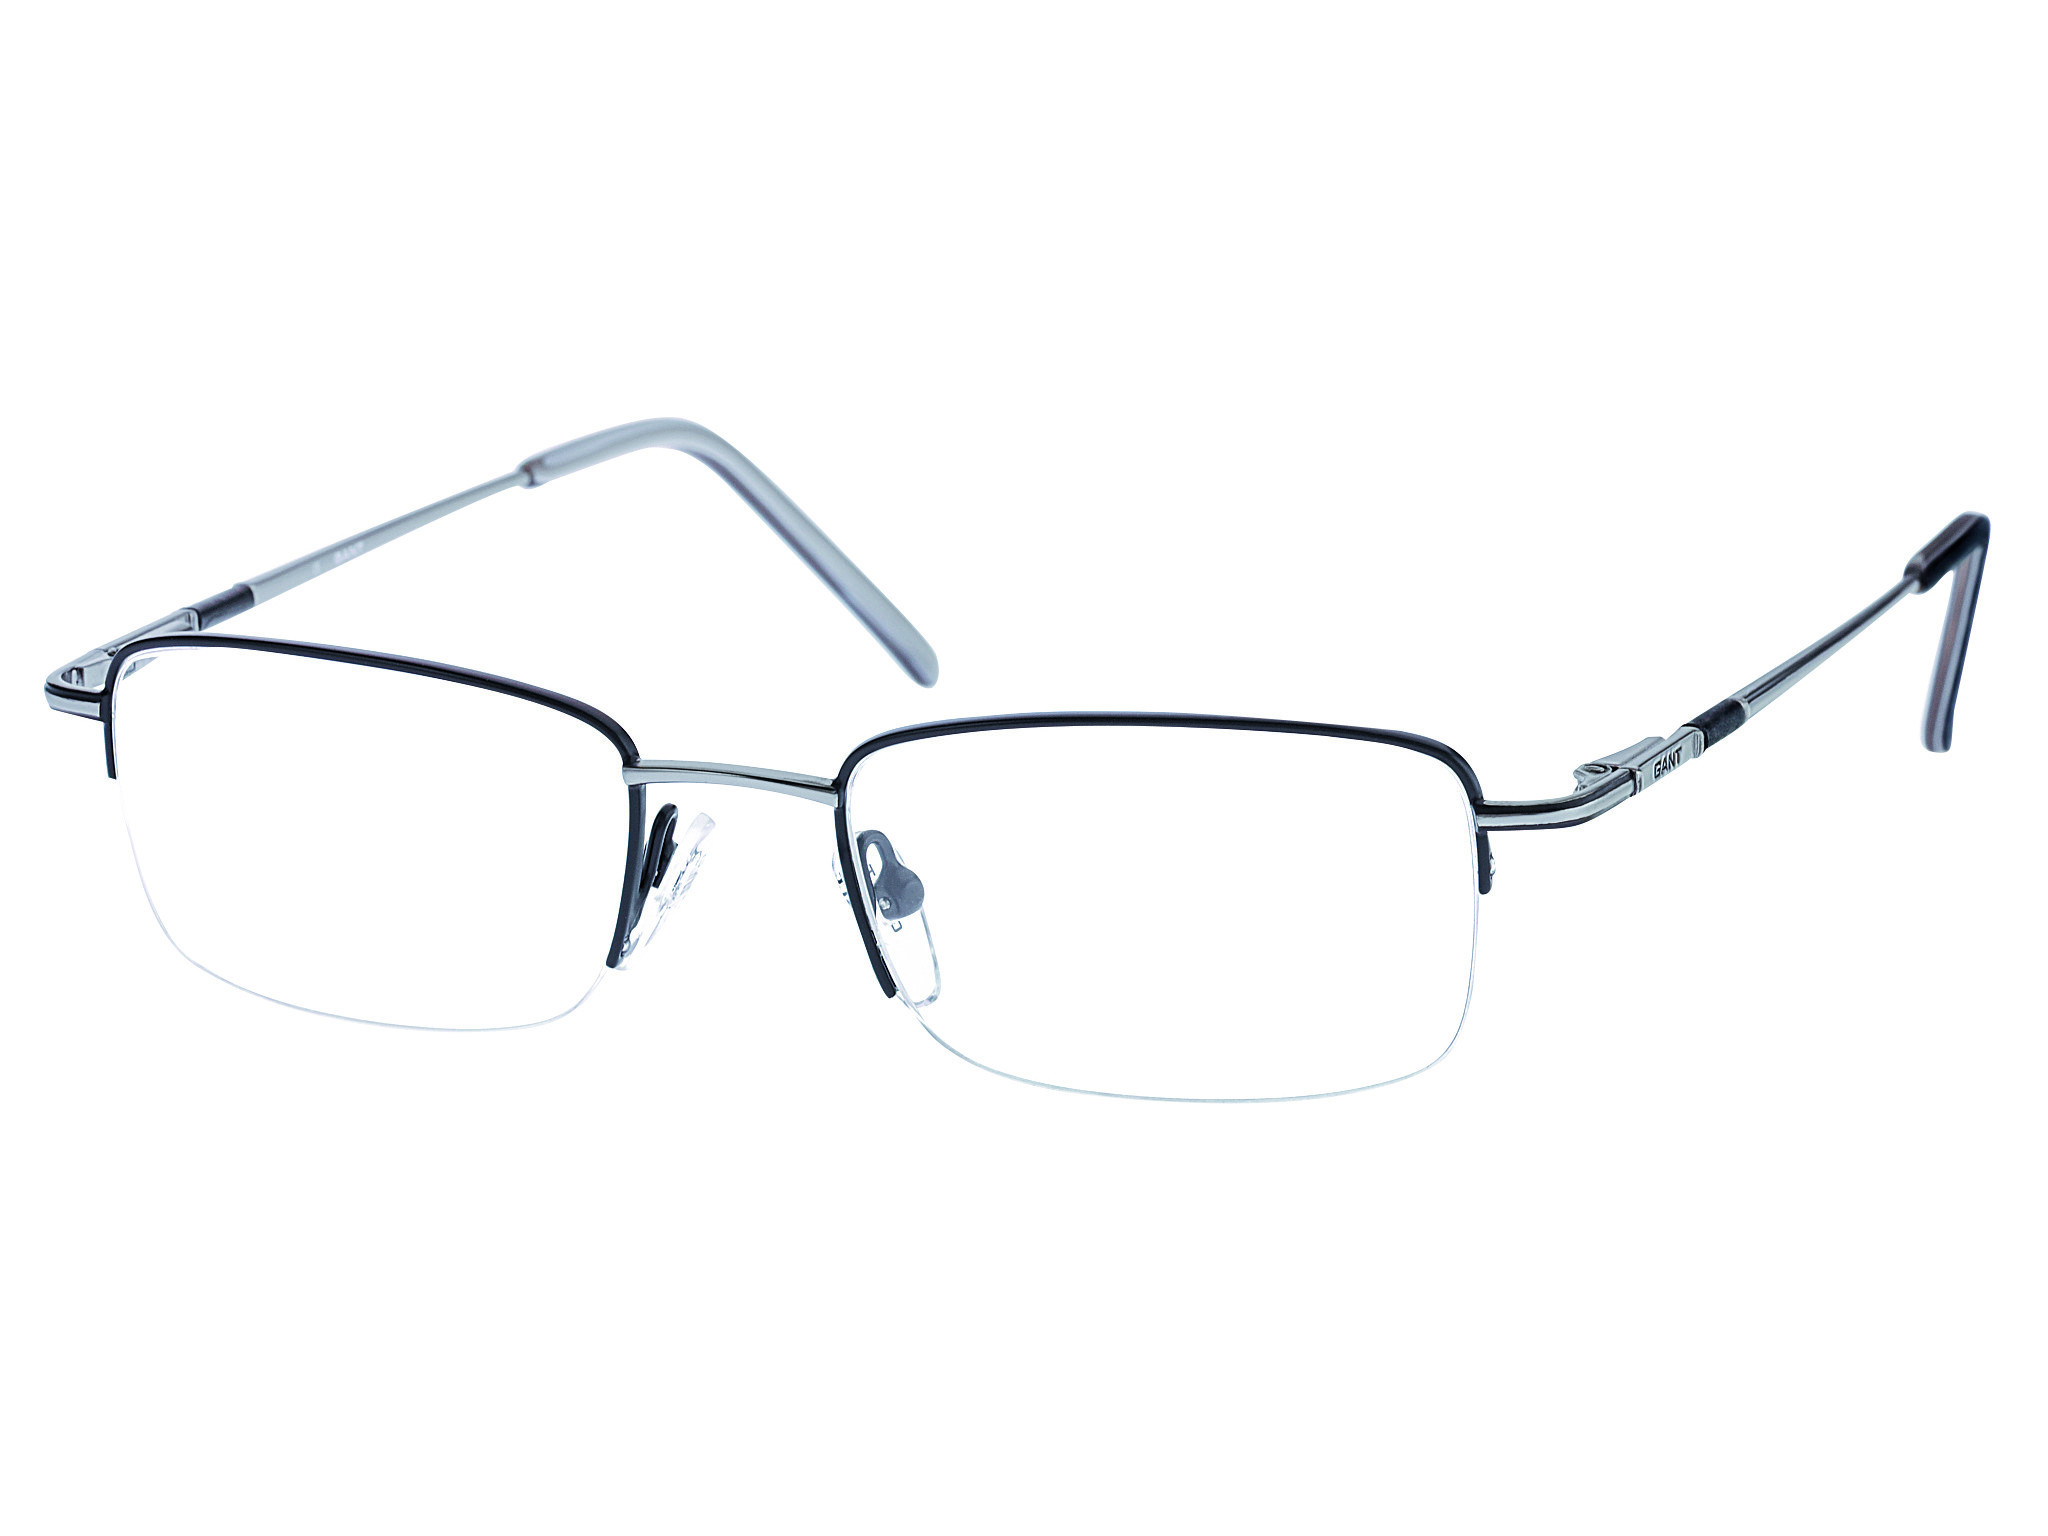 Gant GAA577 Eyeglasses - Gant Authorized Retailer - coolframes.com